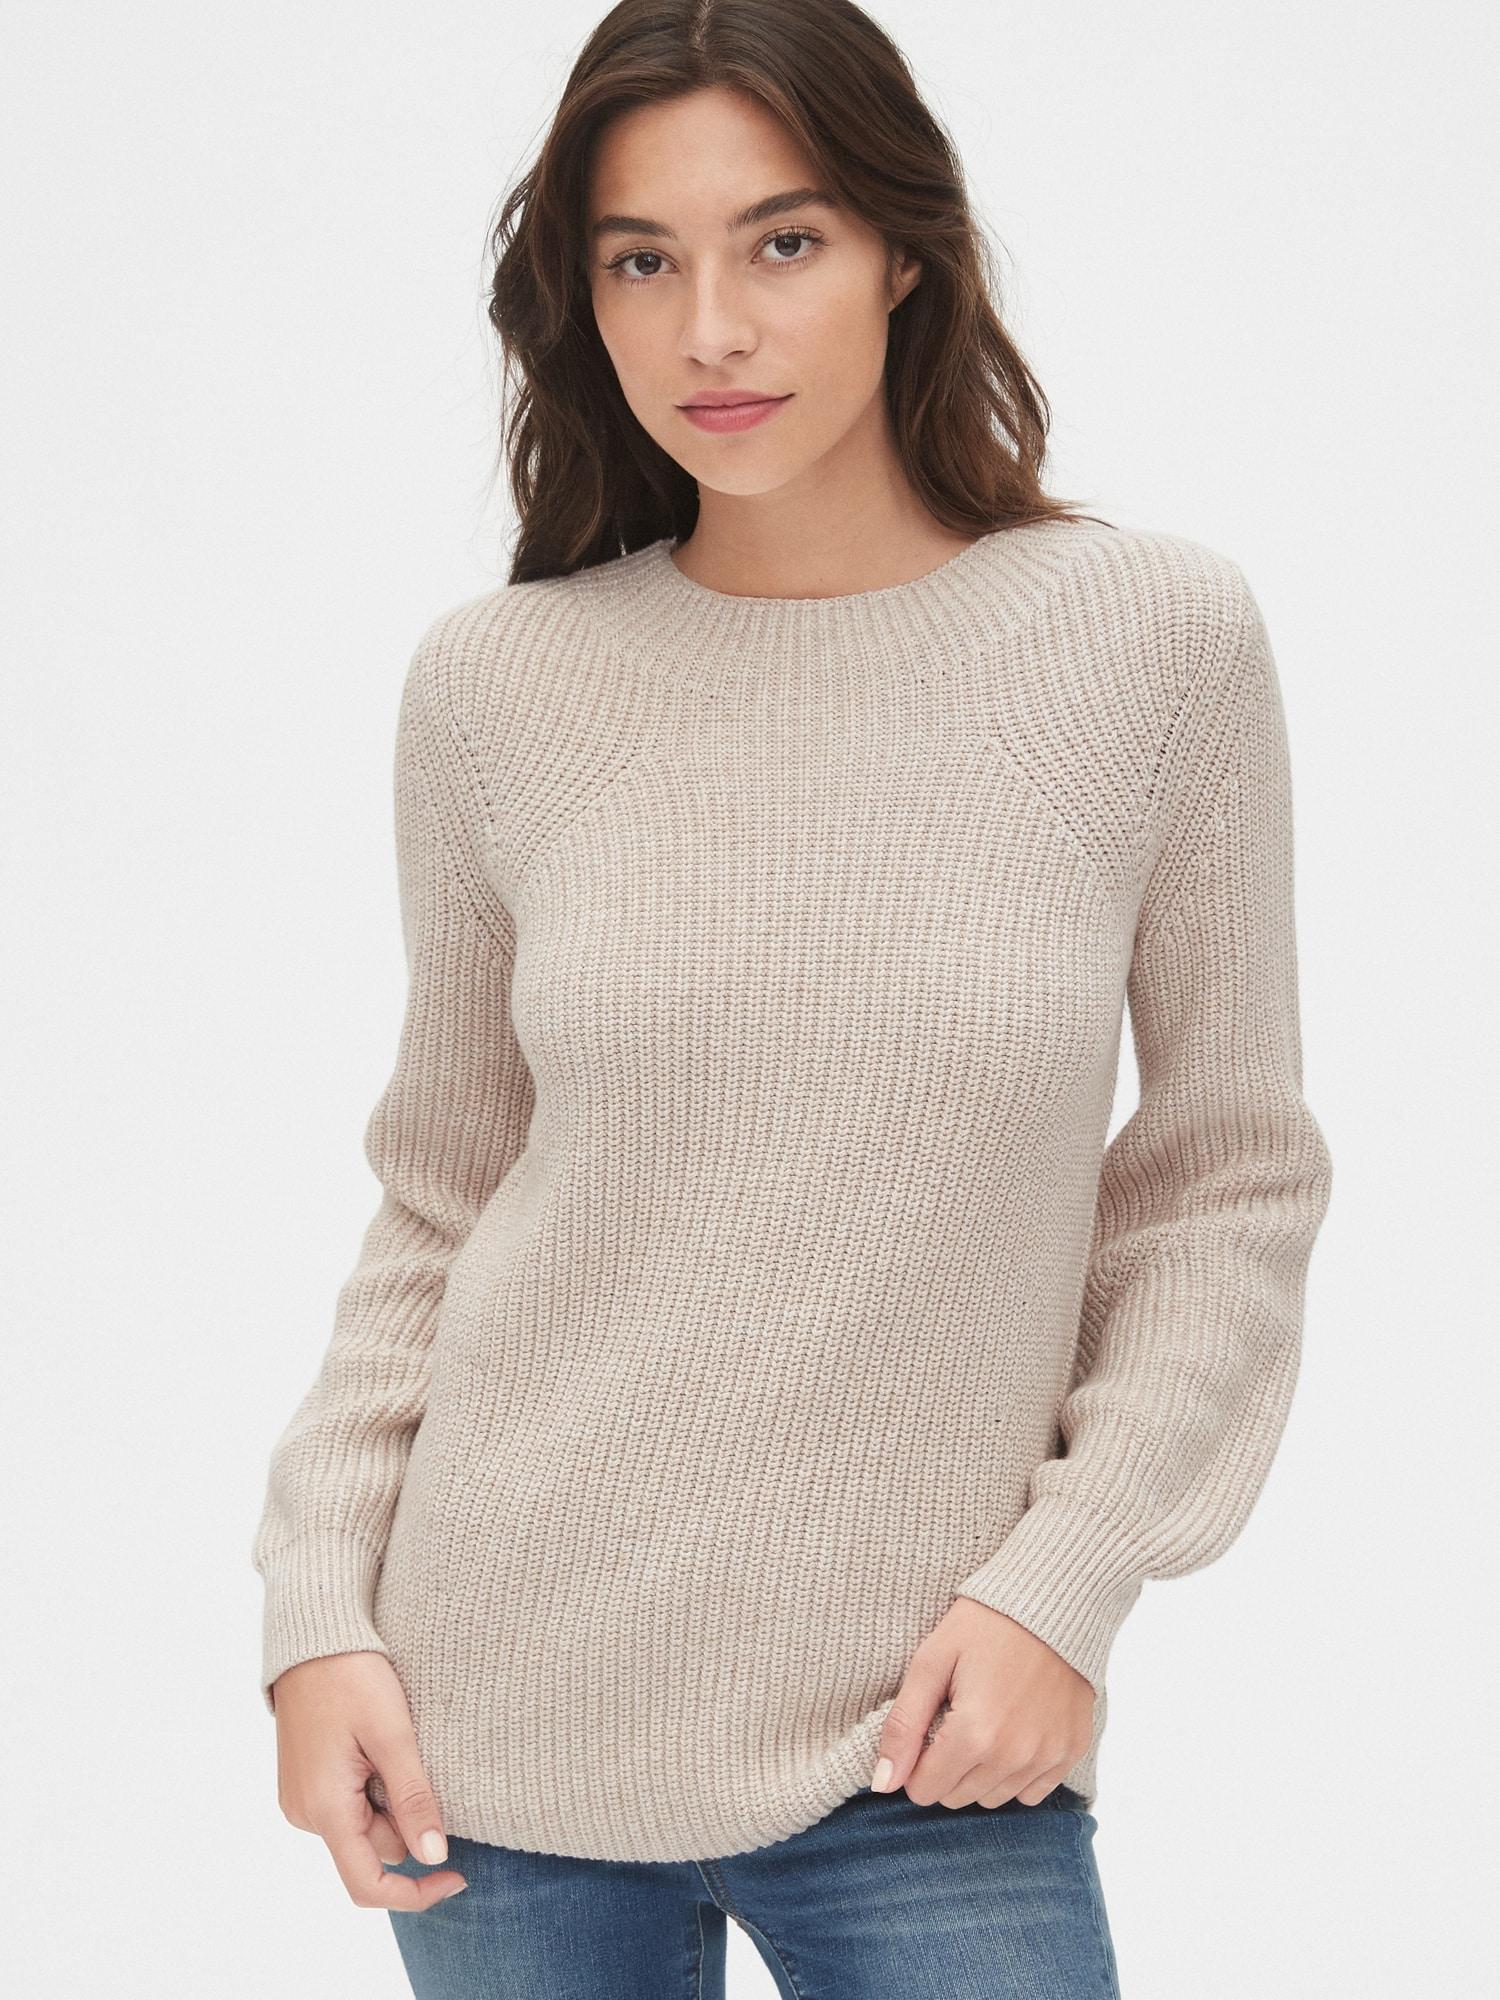 Gap Cotton Shaker Stitch Crewneck Sweater in Oatmeal Beige (Natural) - Lyst